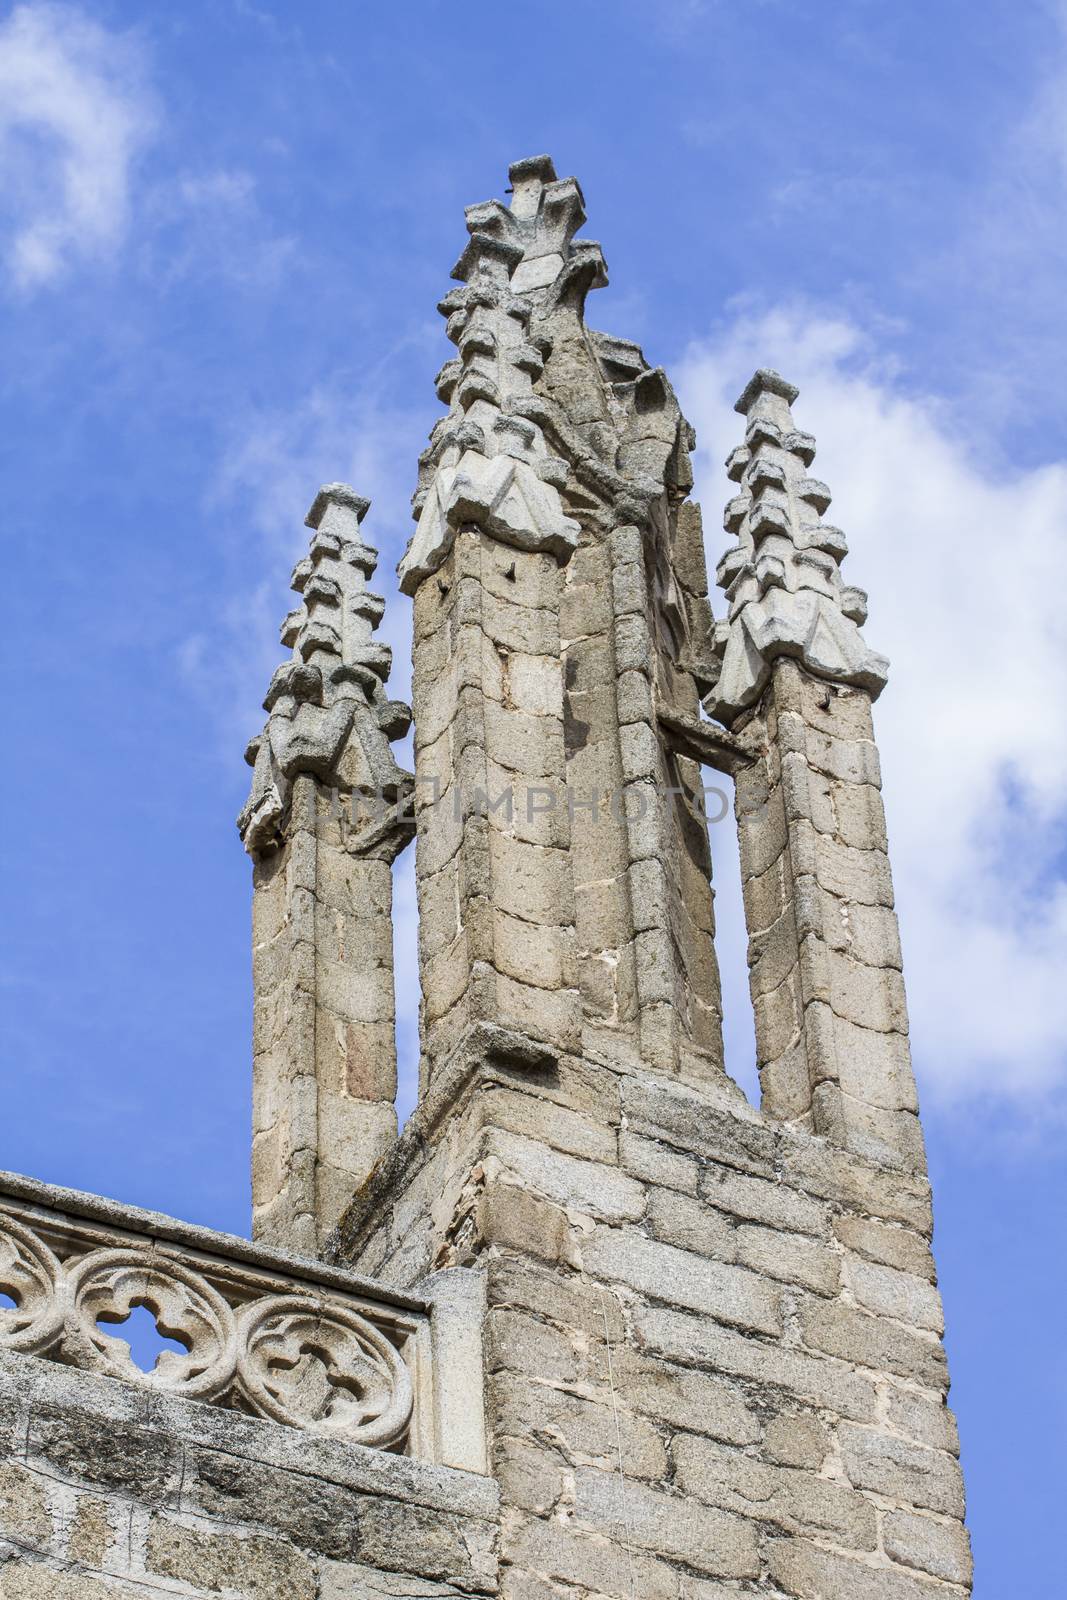 Toledo Cathedral facade, spanish church